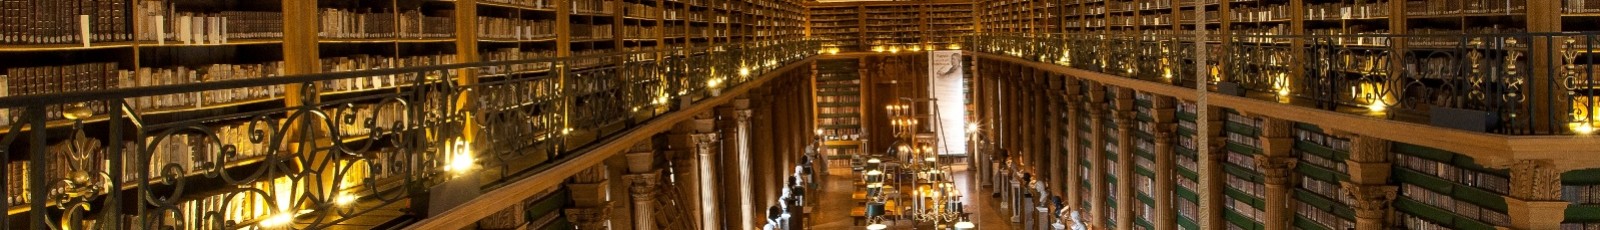 Bibliothèque Mazarine - salle de lecture